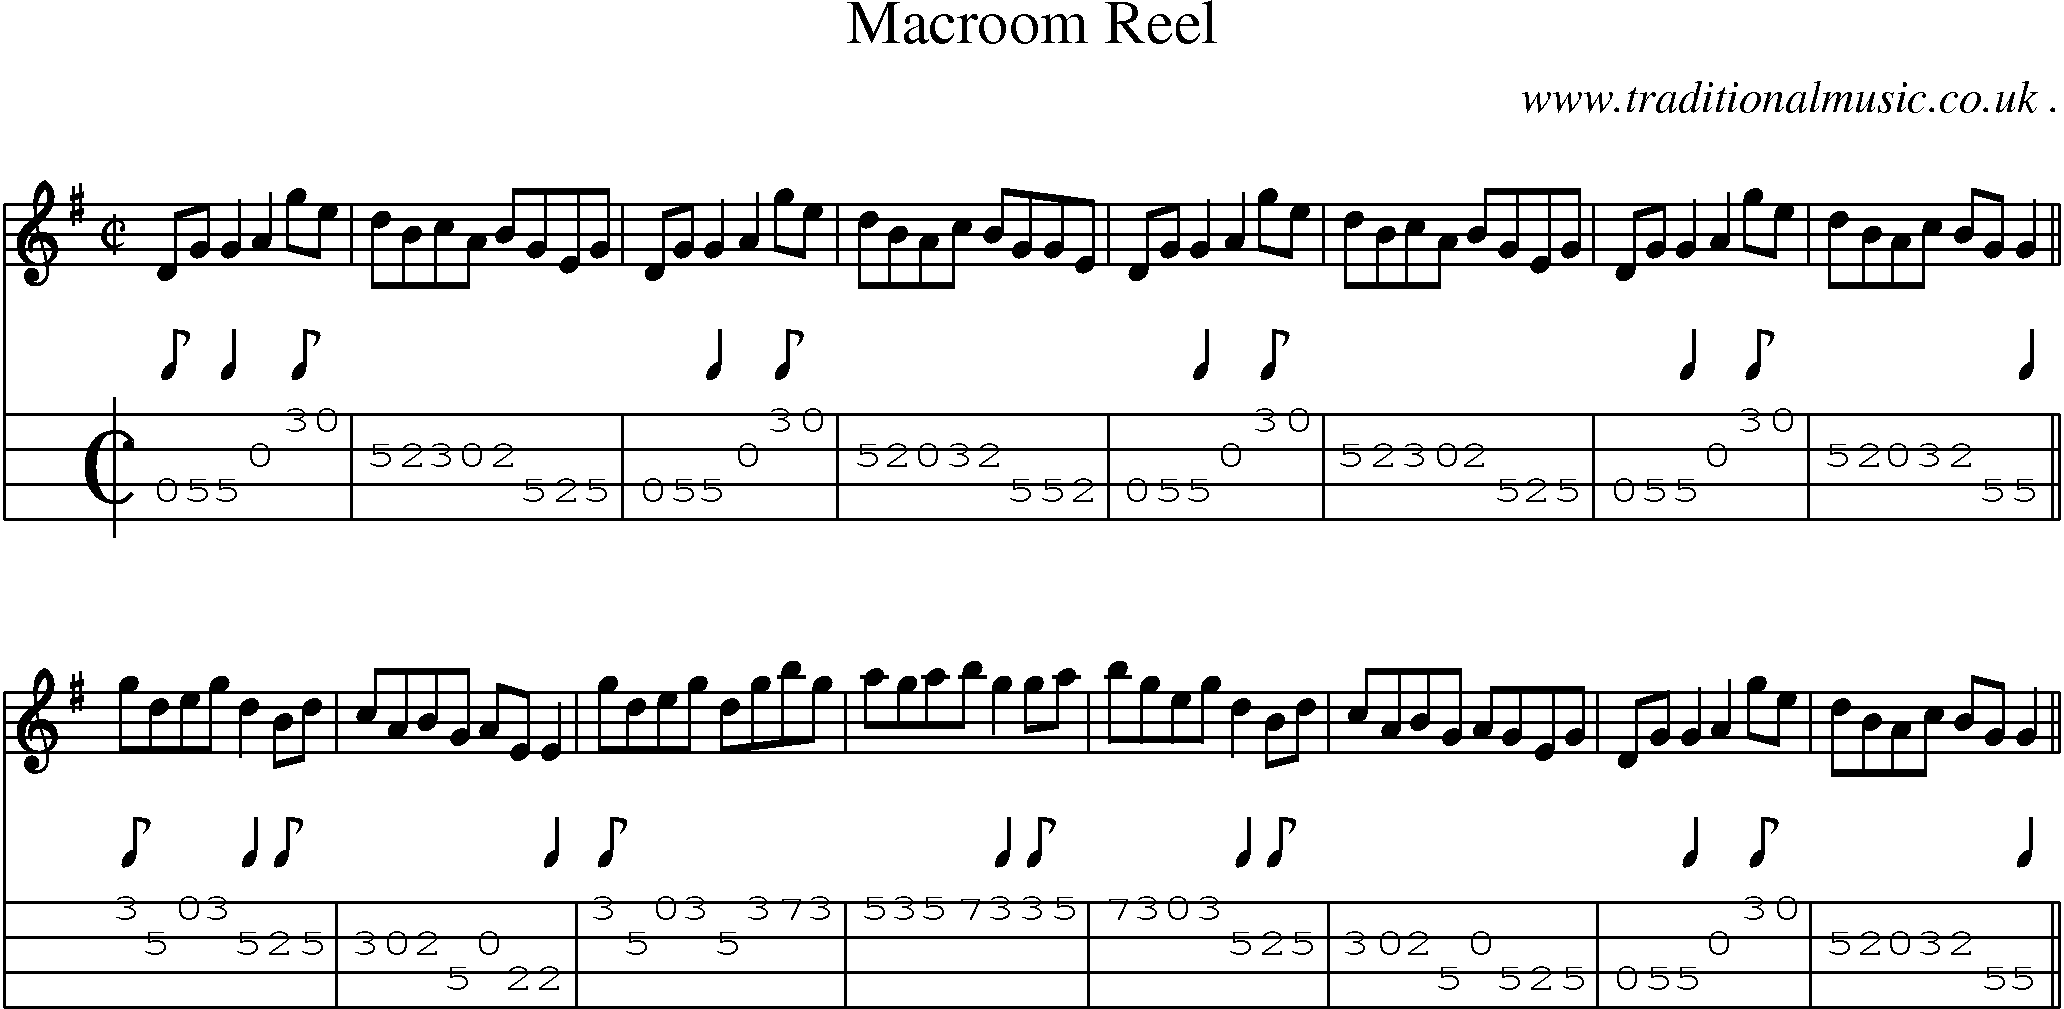 Sheet-Music and Mandolin Tabs for Macroom Reel